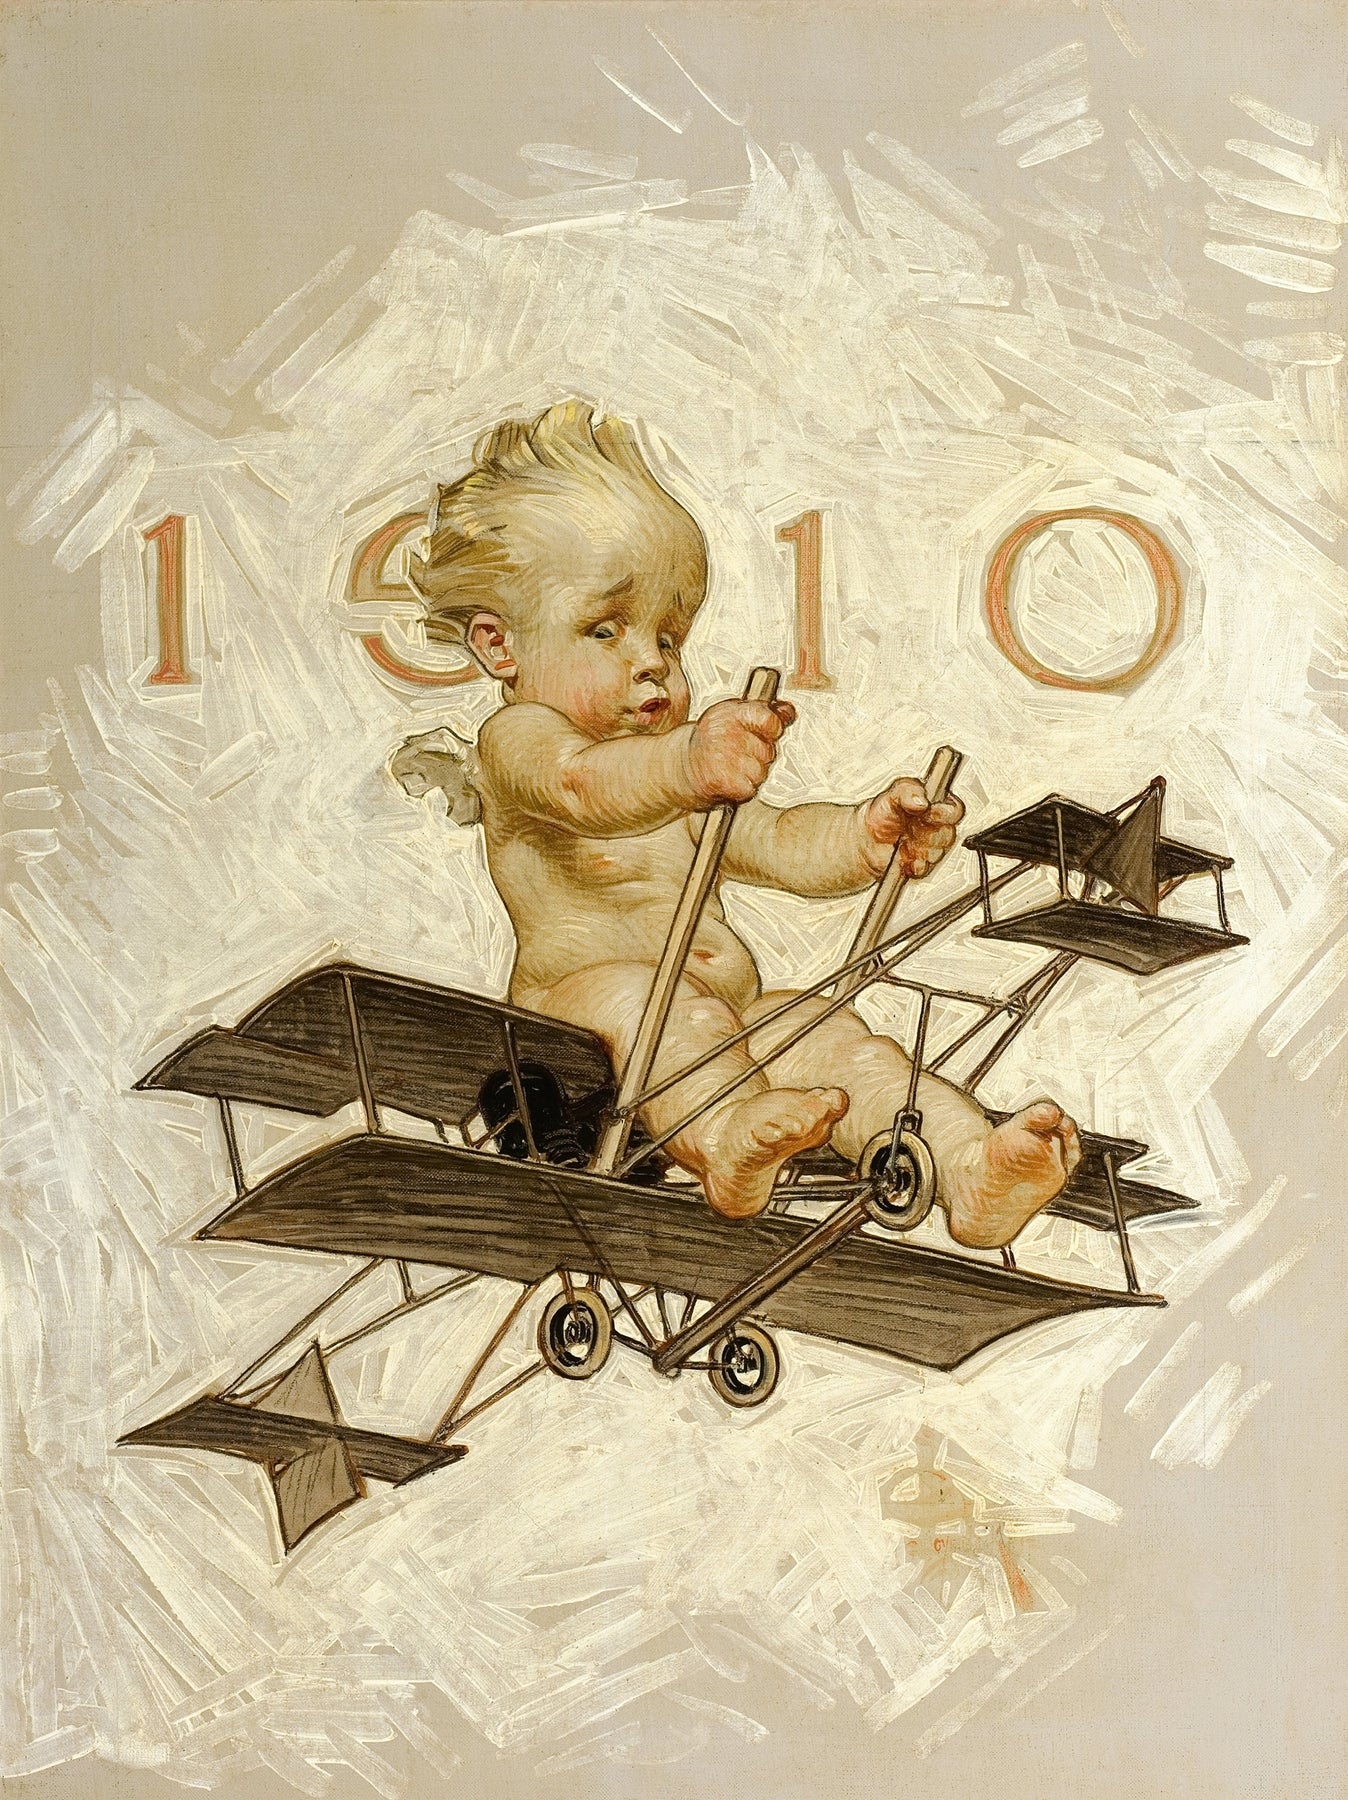 New Years 1910 | J C Leyendecker artwork Posters, Prints, & Visual Artwork The Trumpet Shop   